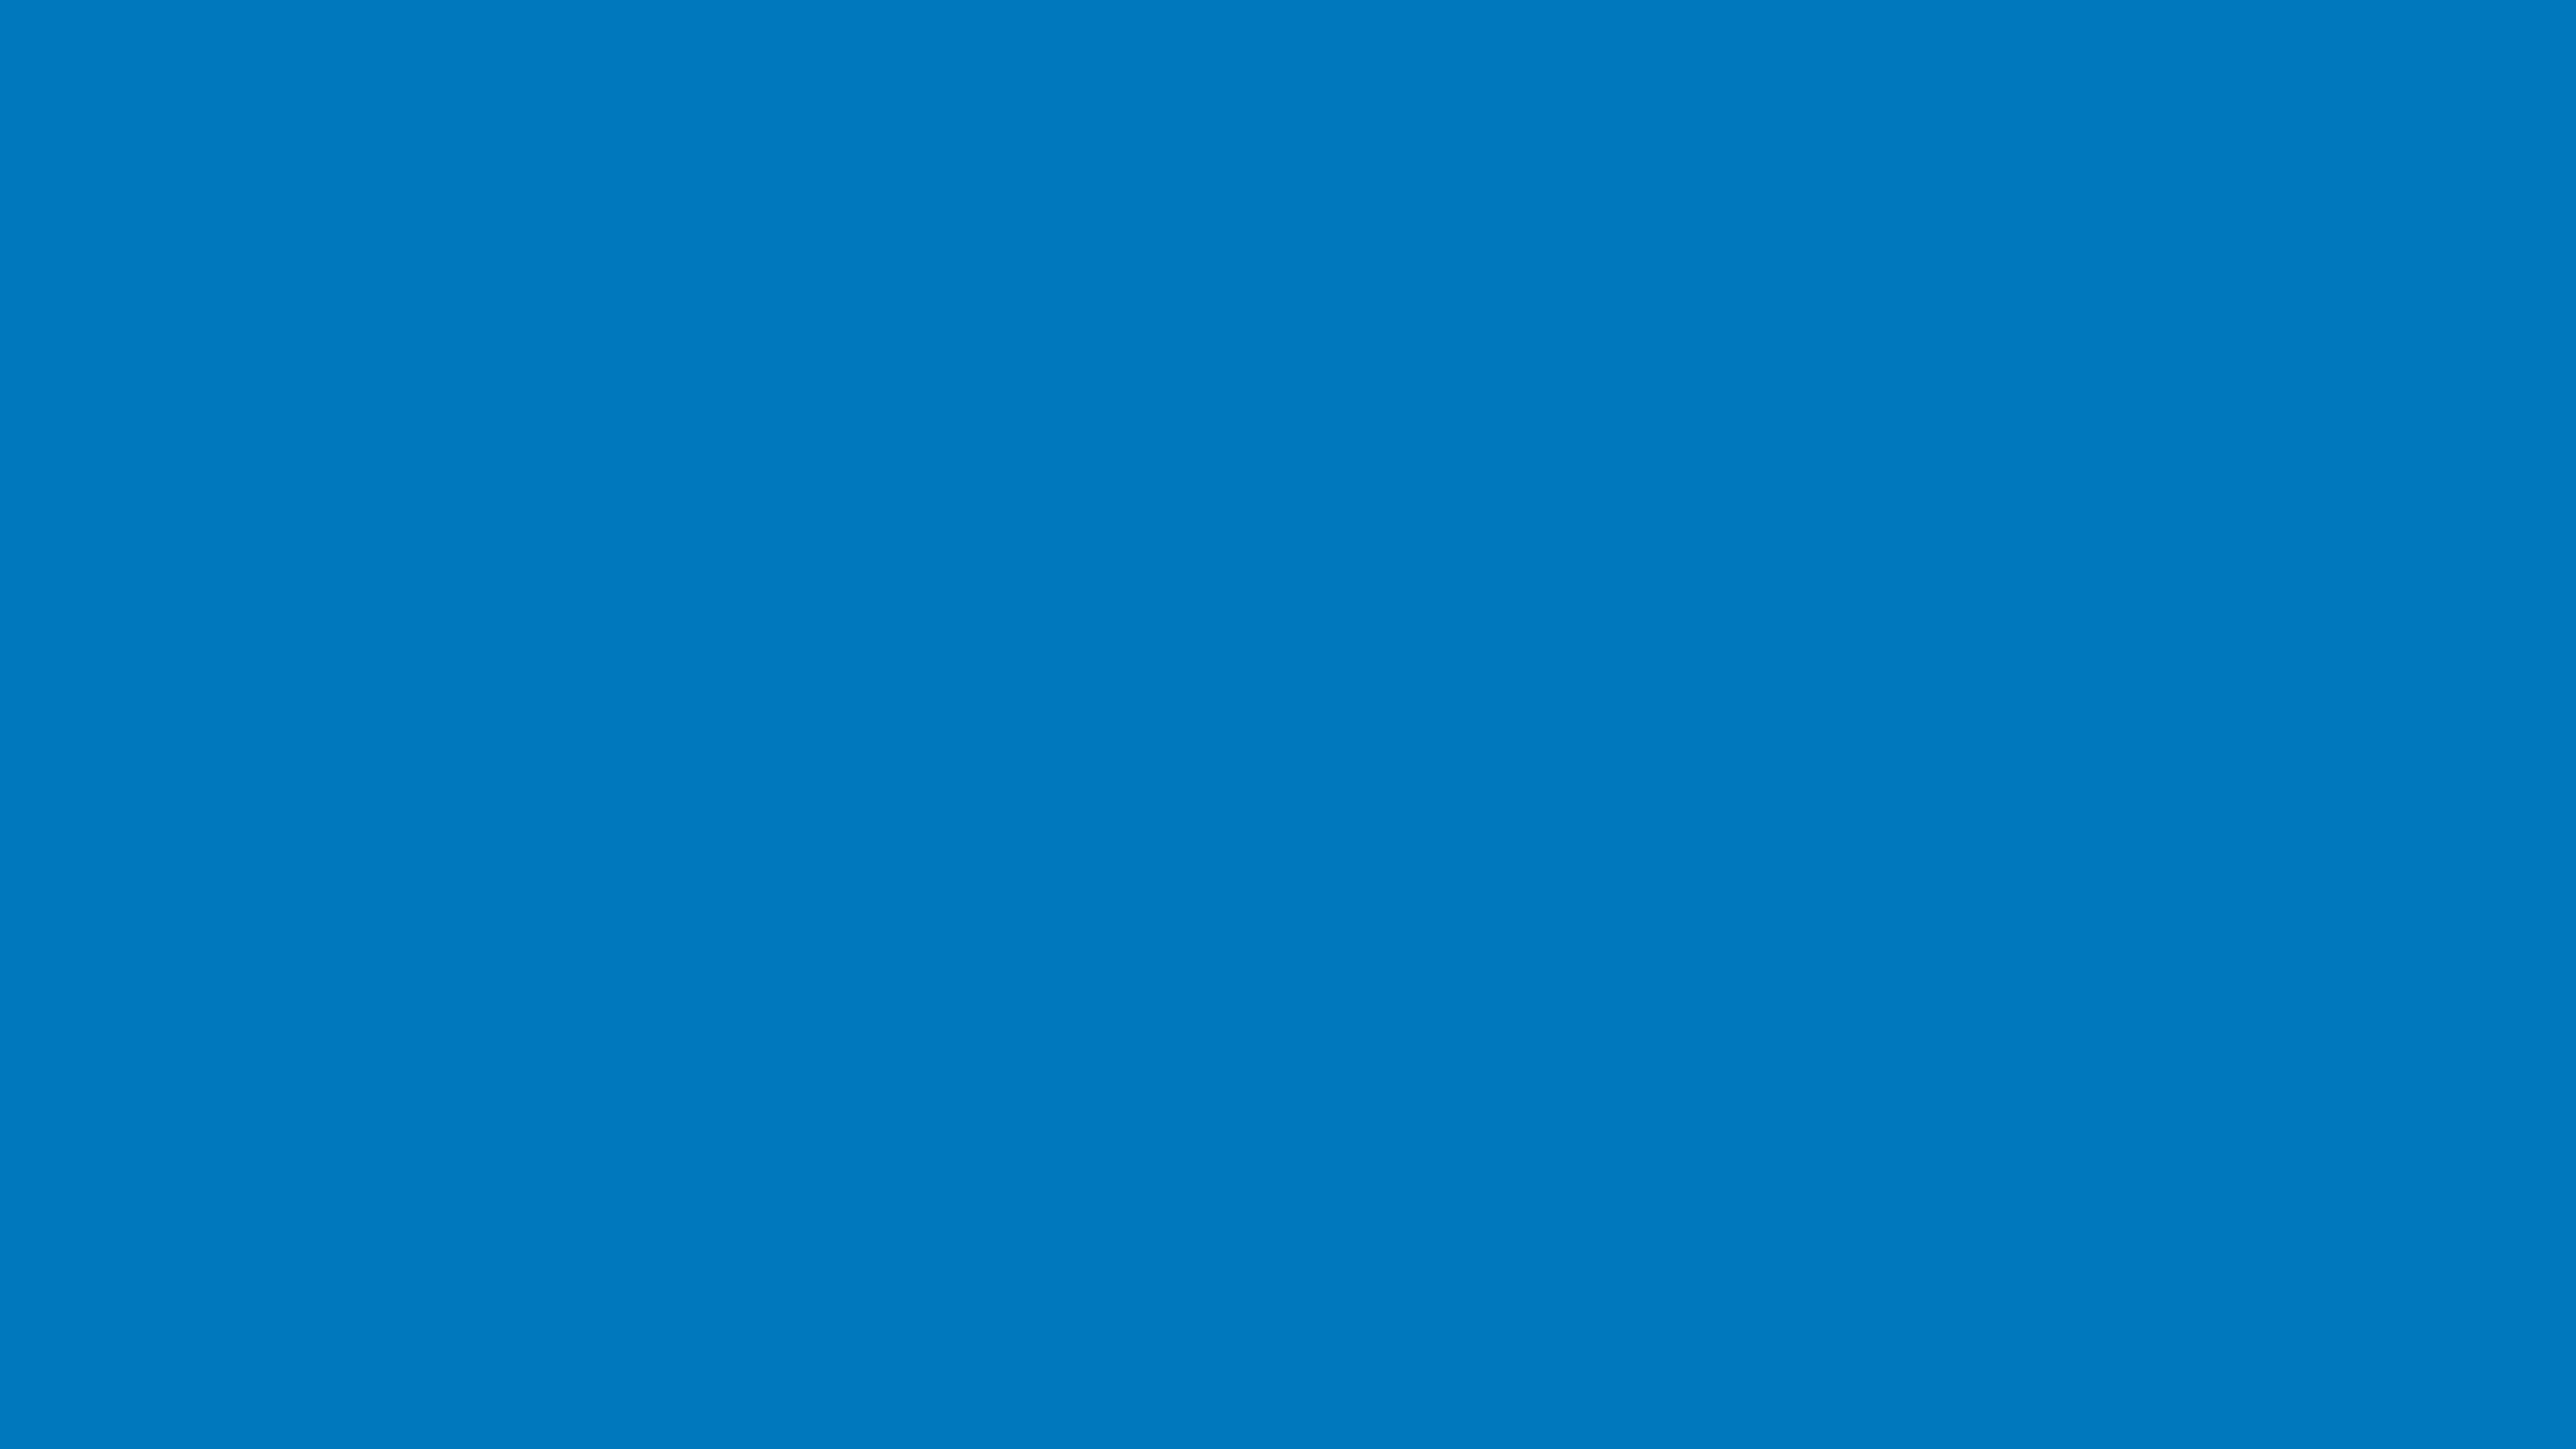 7680x4320 Ocean Boat Blue Solid Color Background